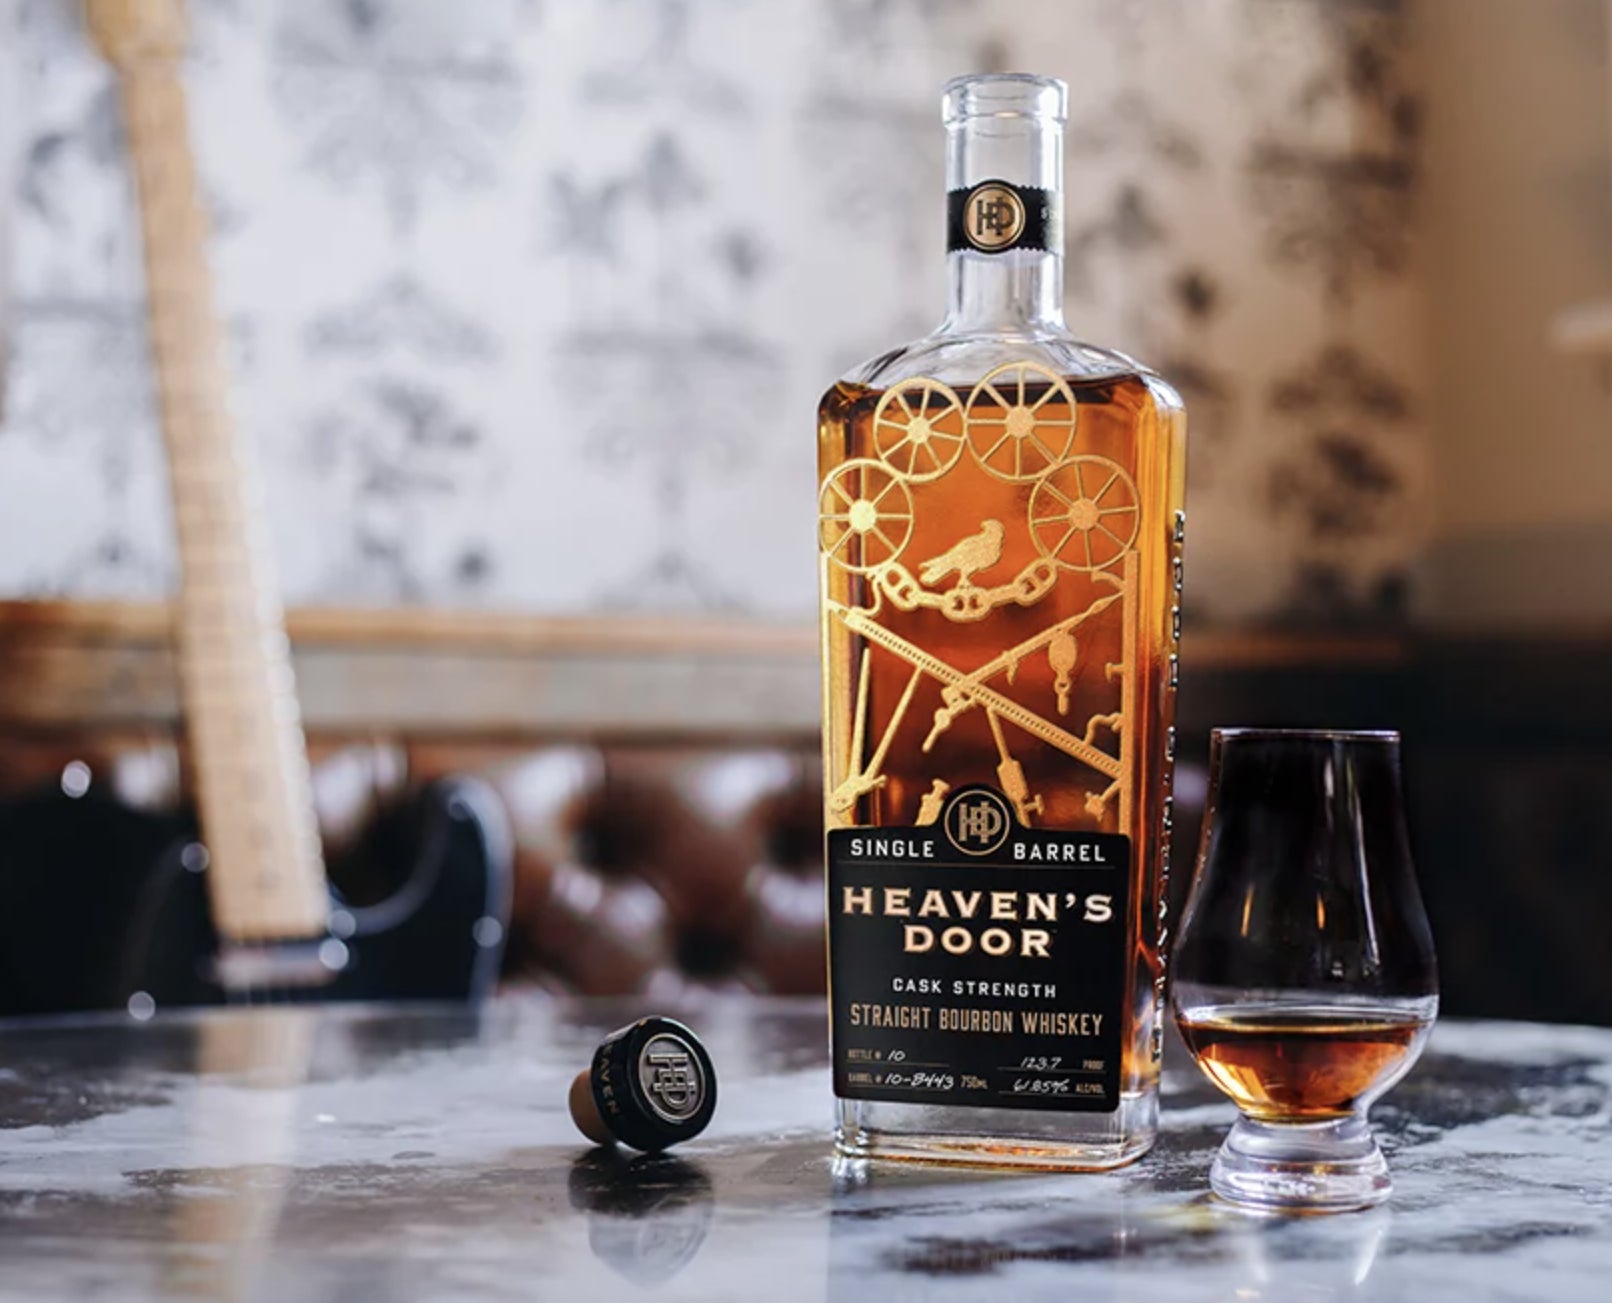 Homesick Blues Minnesota Wheated Bourbon Whiskey + Mixing Up The Medic –  Heaven's Door